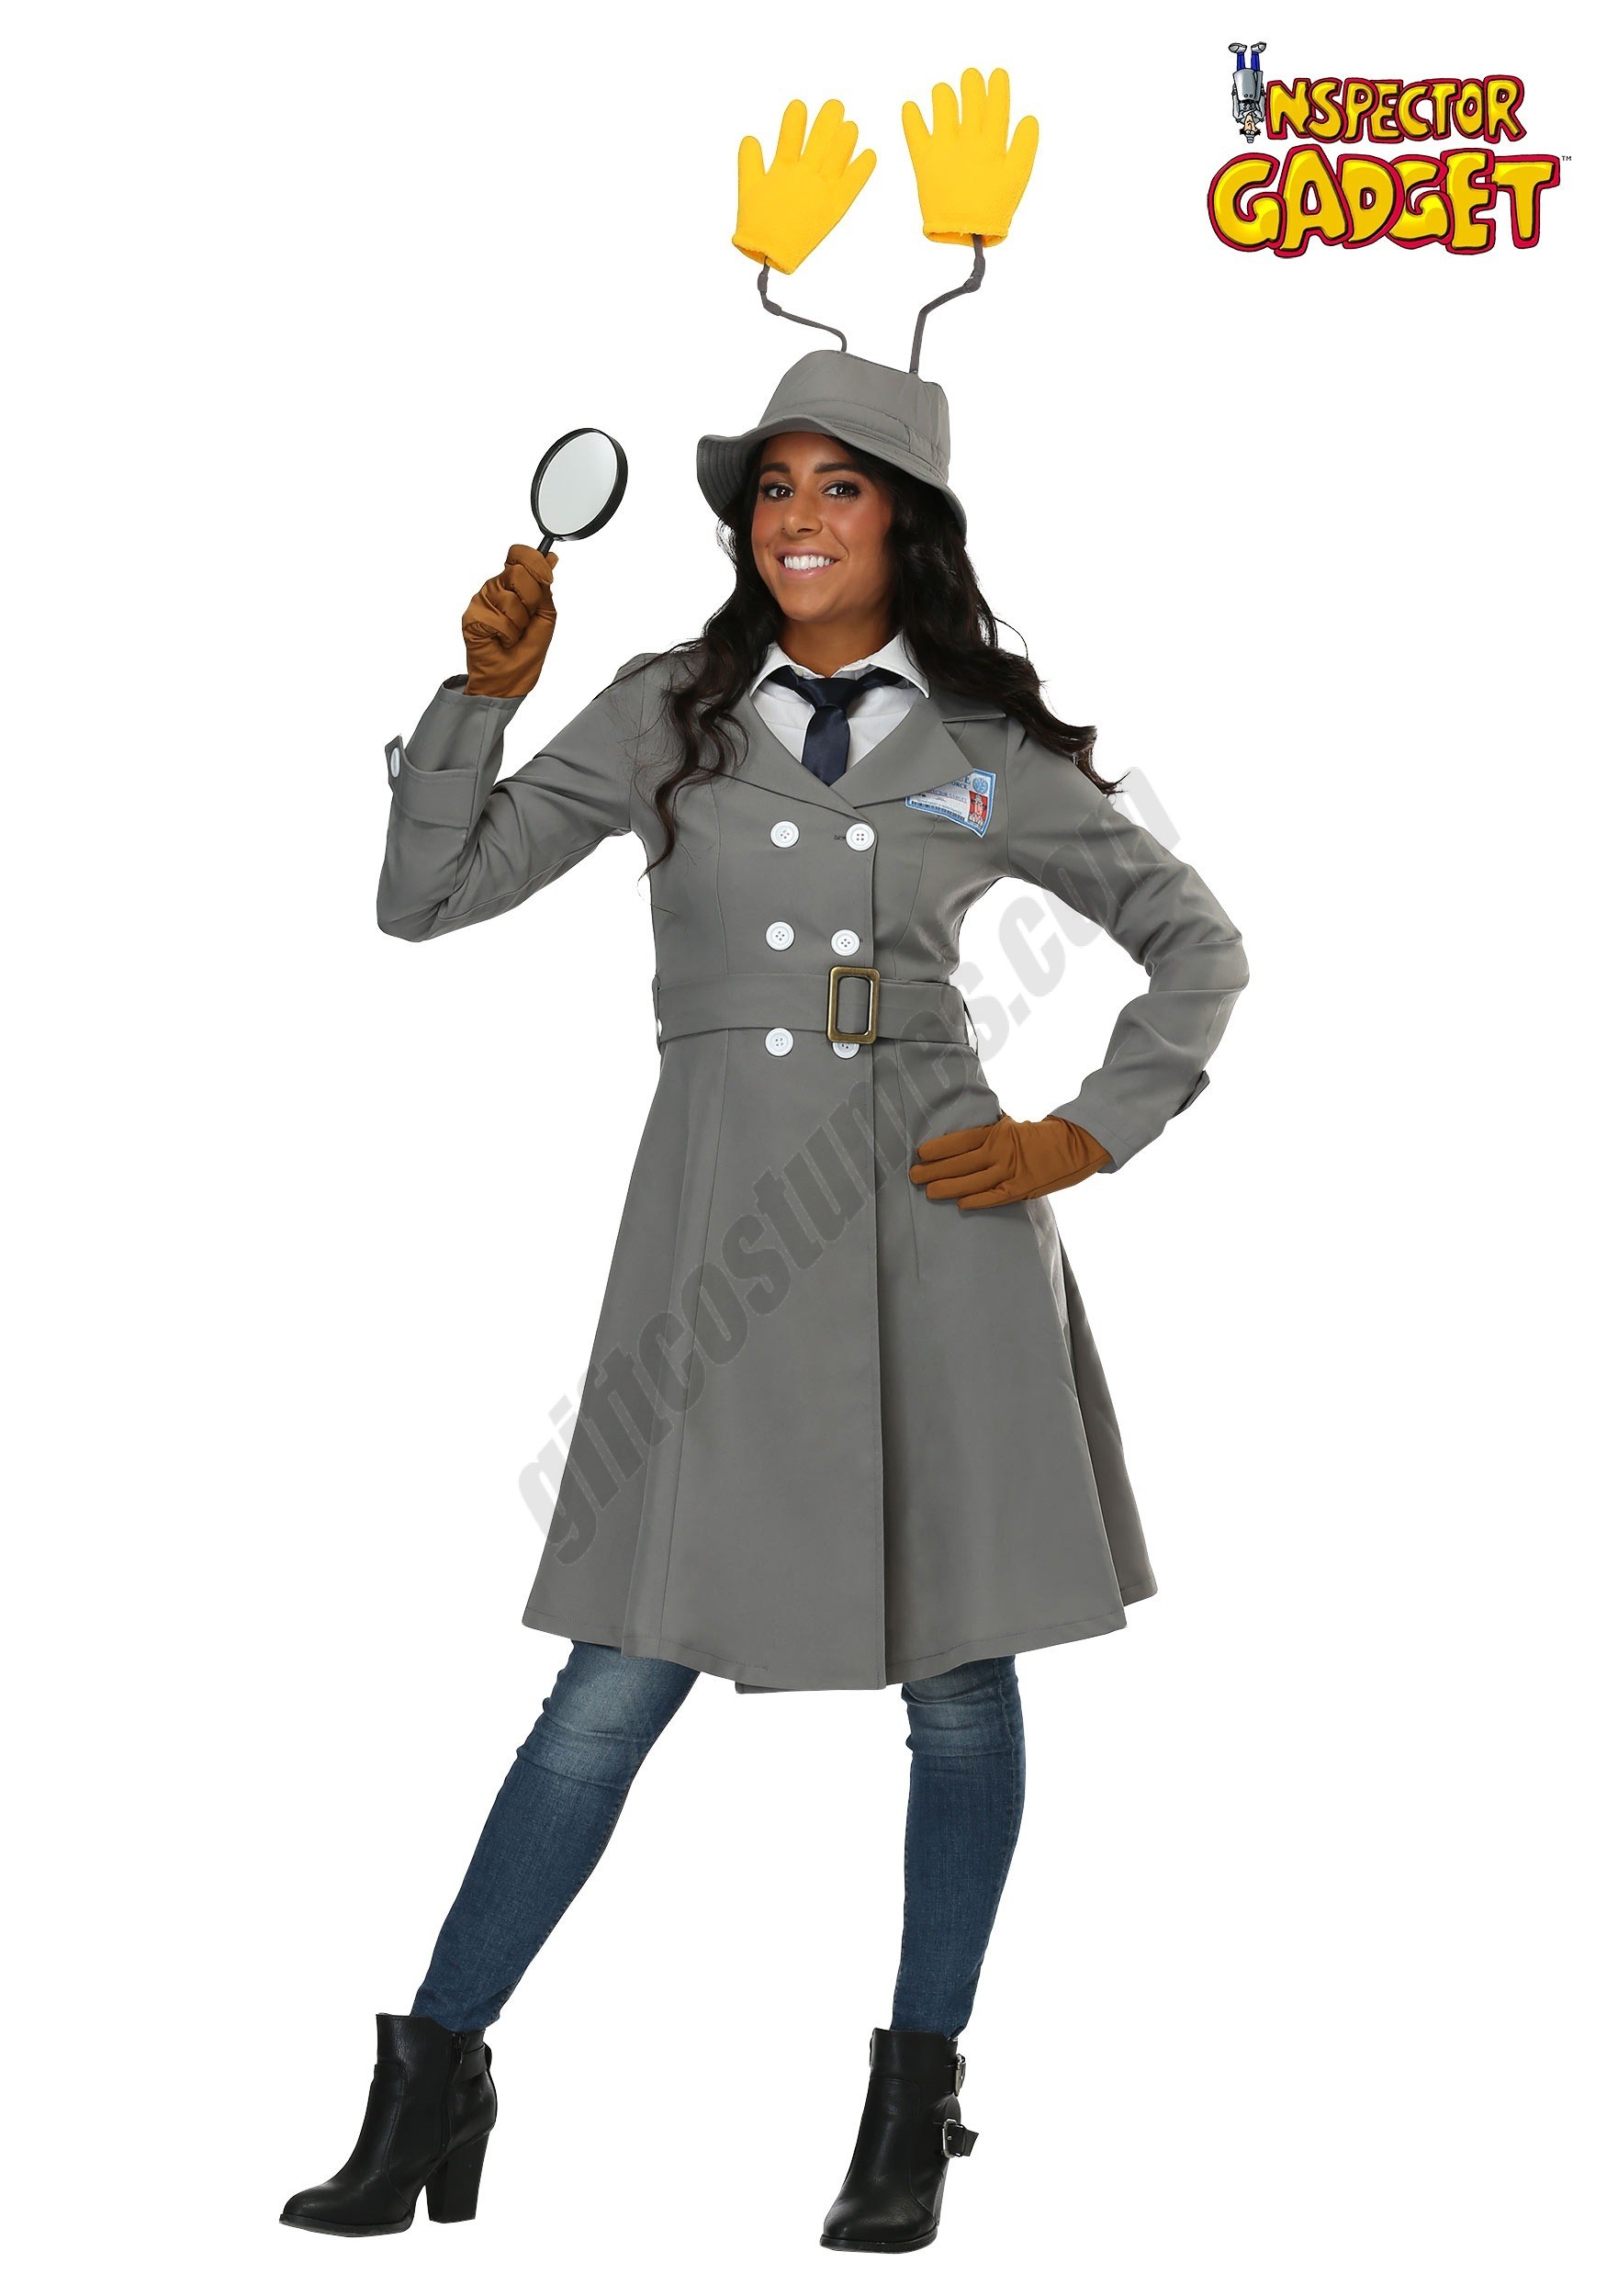 Inspector Gadget Women's Costume Promotions - Inspector Gadget Women's Costume Promotions